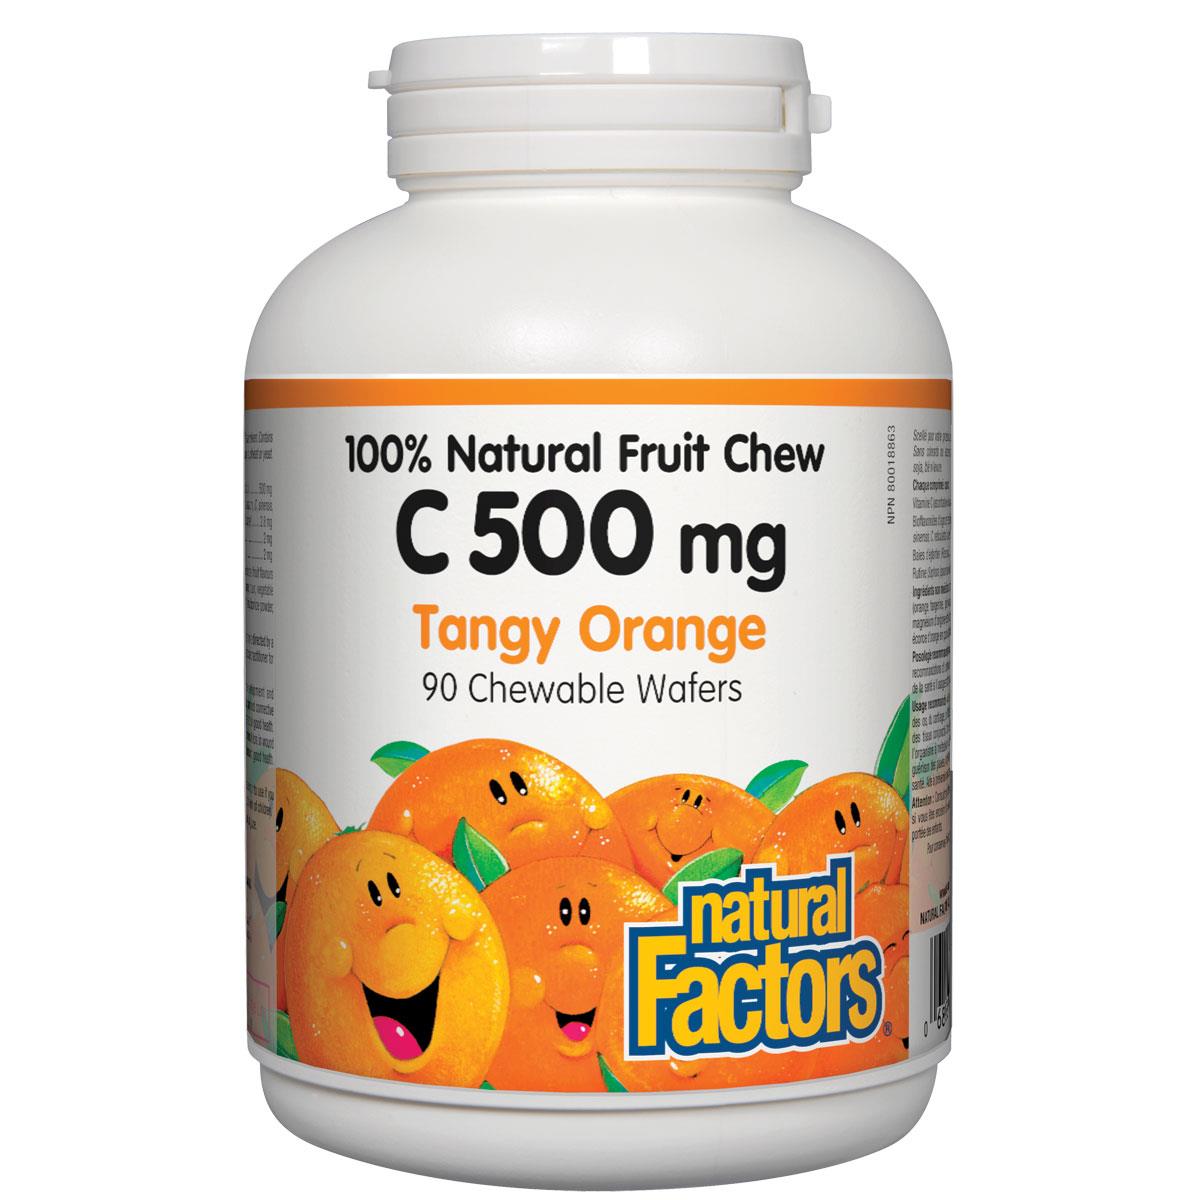 Natural Factors Vitamin C 100% Natural Fruit Chew (Tangy Orange Flavour), 500mg, 90 Chewables